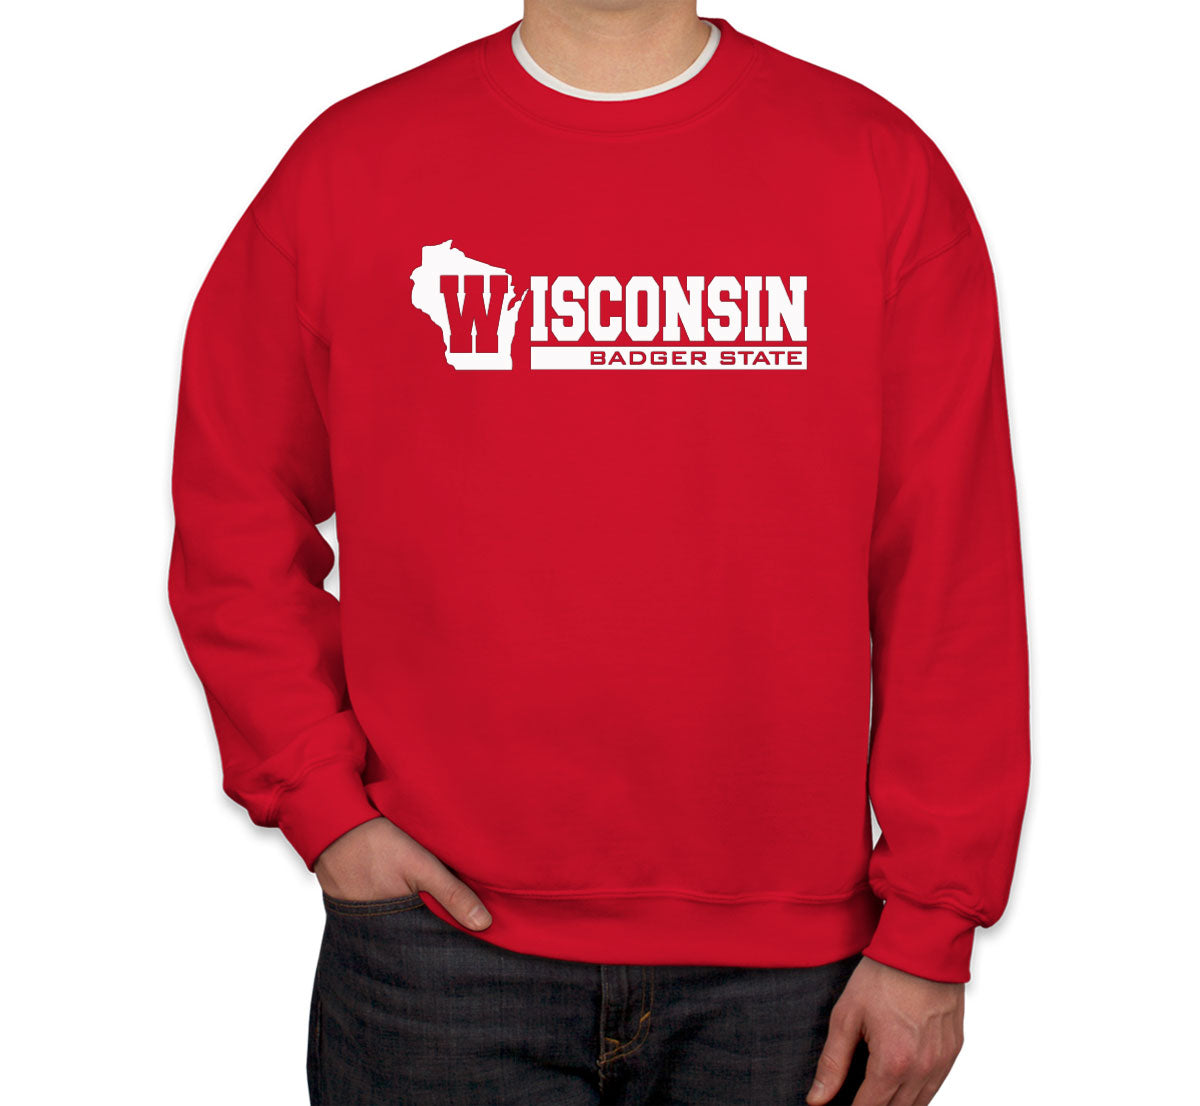 Wisconsin Badger State Unisex Sweatshirt